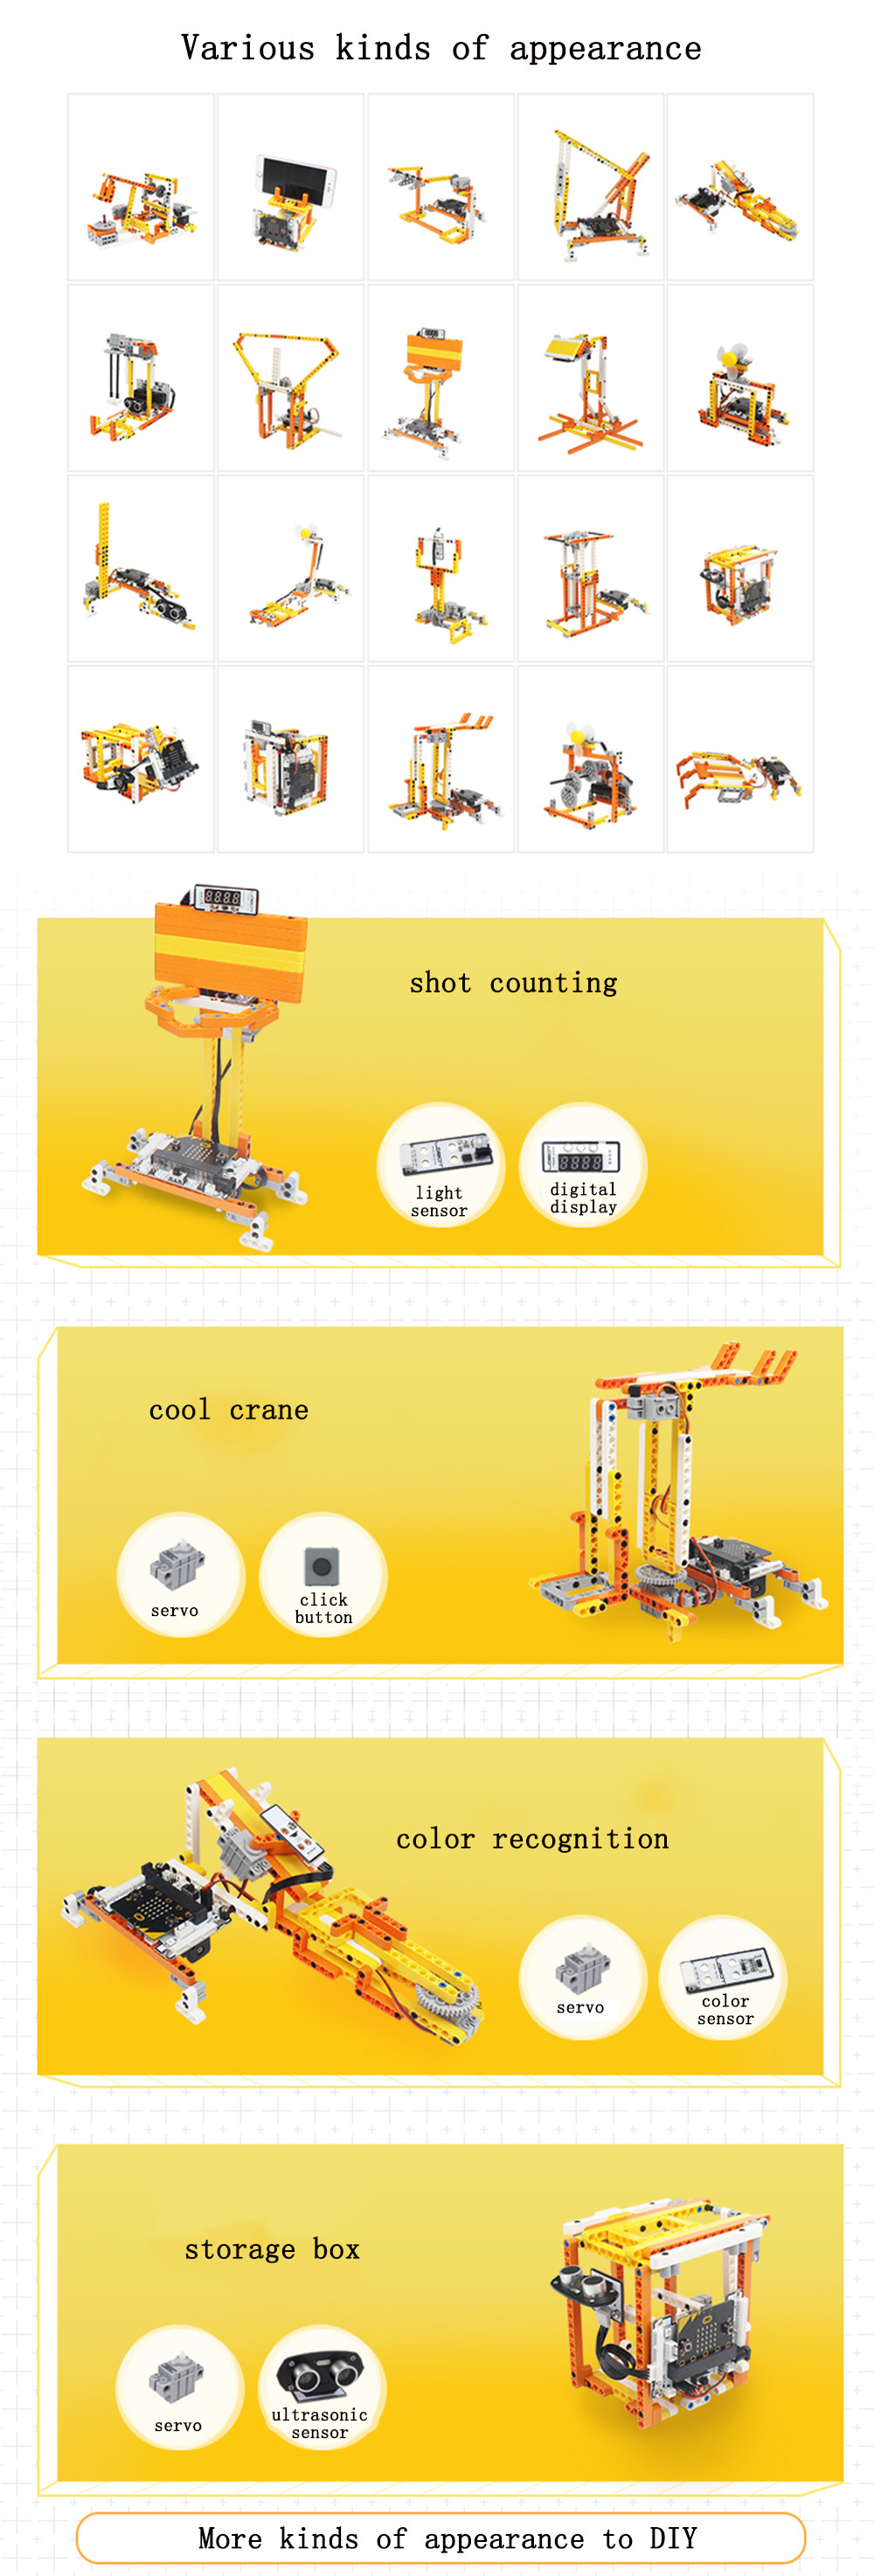 LOBOT-DaDabit-STEAM-DIY-Multifunctional-Programmable-RC-Robot-Educational-Kit-Compatible-Microbit-Py-1527726-8